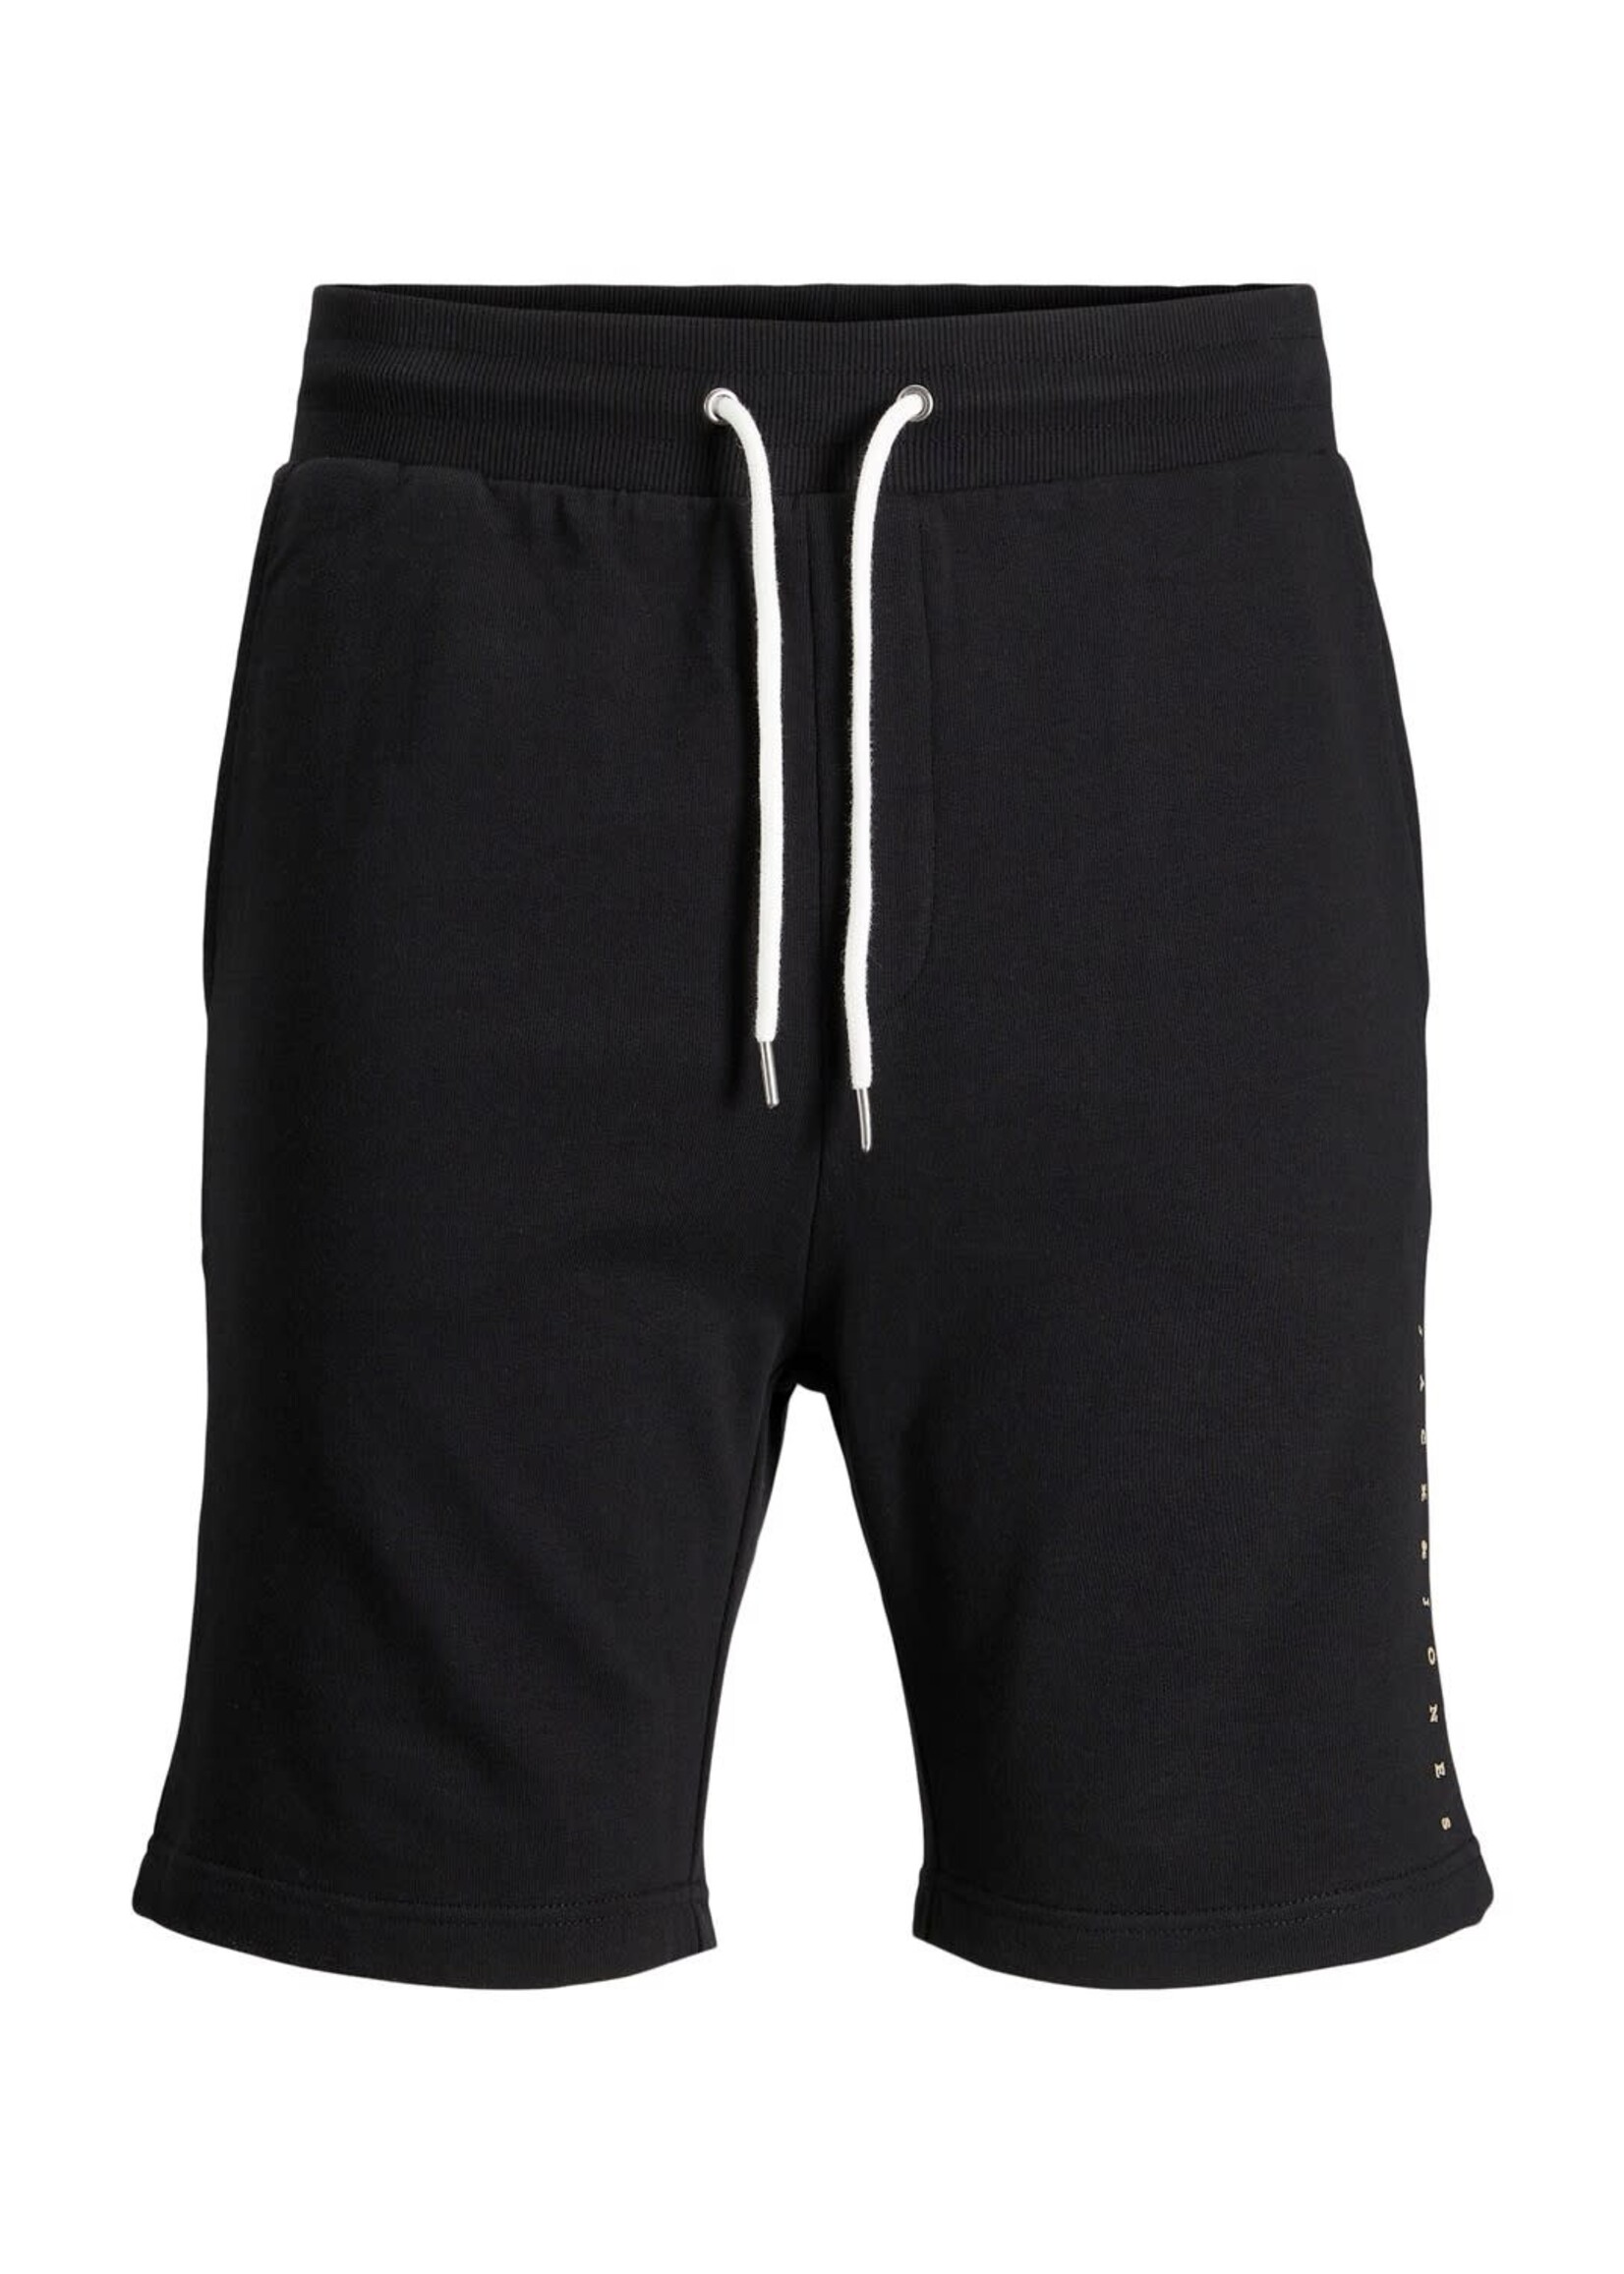 Font sweat shorts - Black multi color